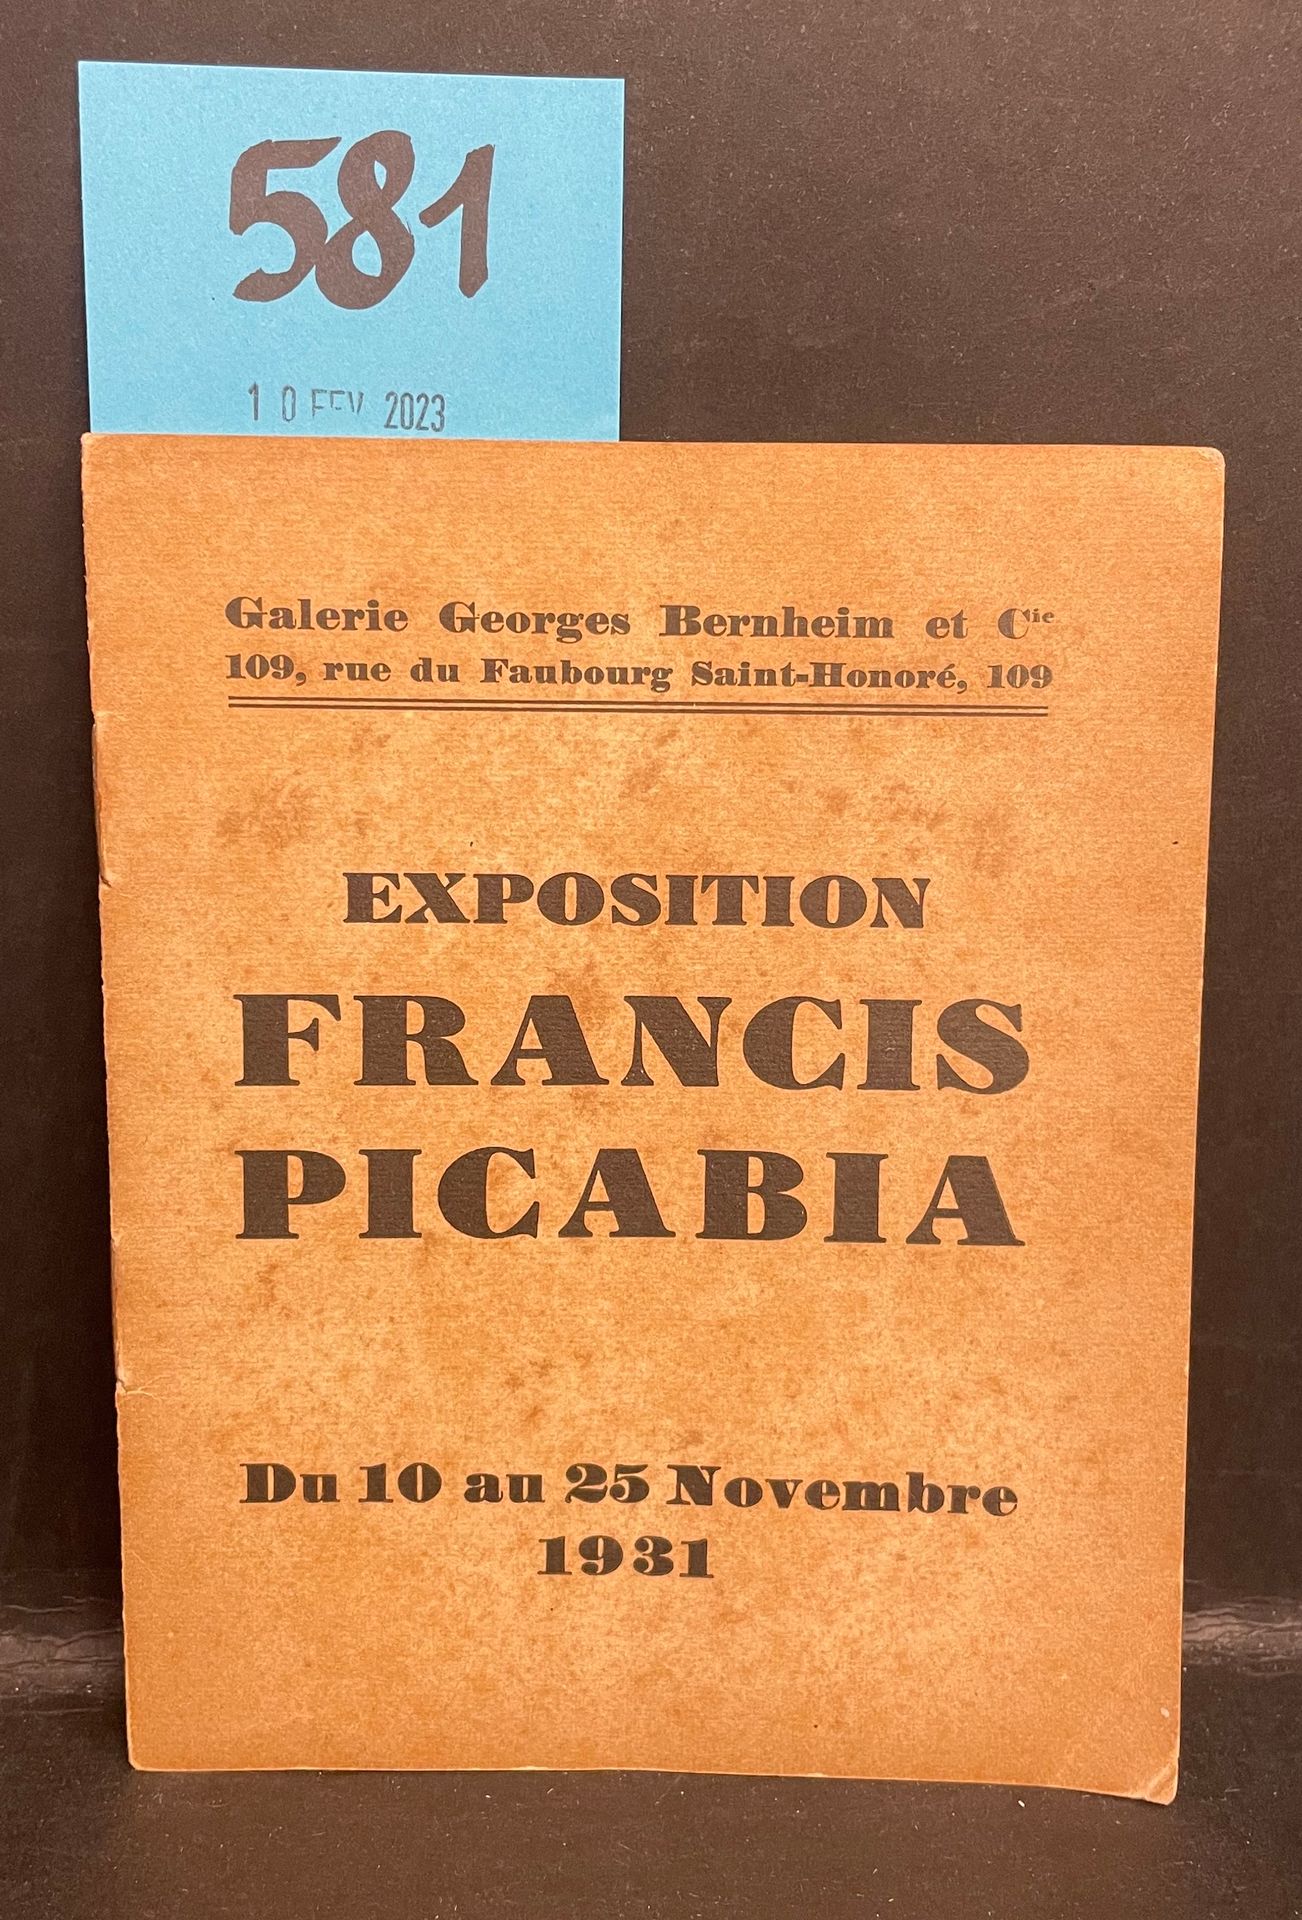 PICABIA.- Francis Picabia展览。P.，Georges Bernheim画廊，1931年11月10日至25日，16开本的小册子，装订（封面&hellip;